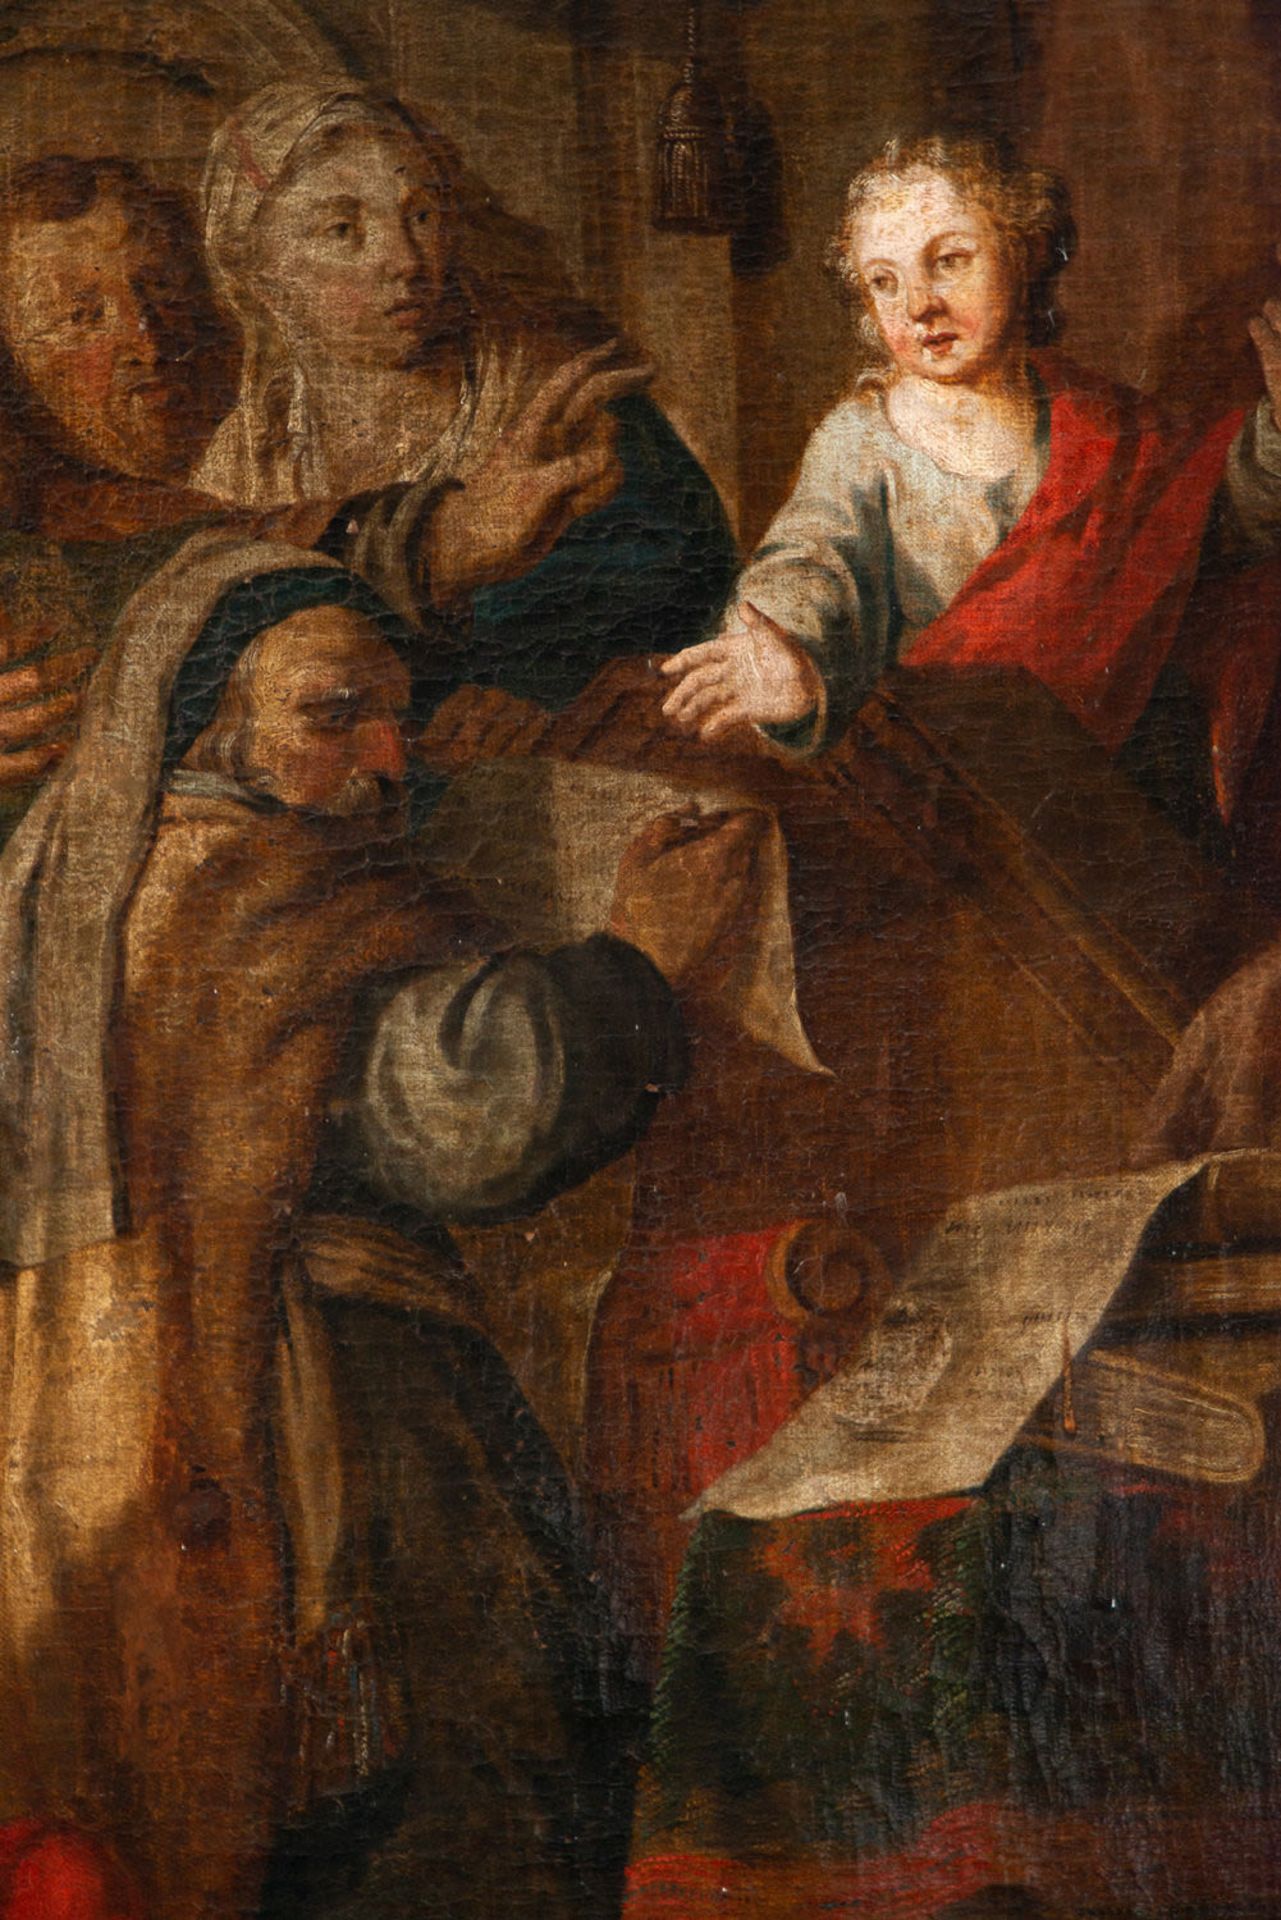 Jesus preaching to the Rabbis in the Temple, 17th century Flemish school - Bild 5 aus 8